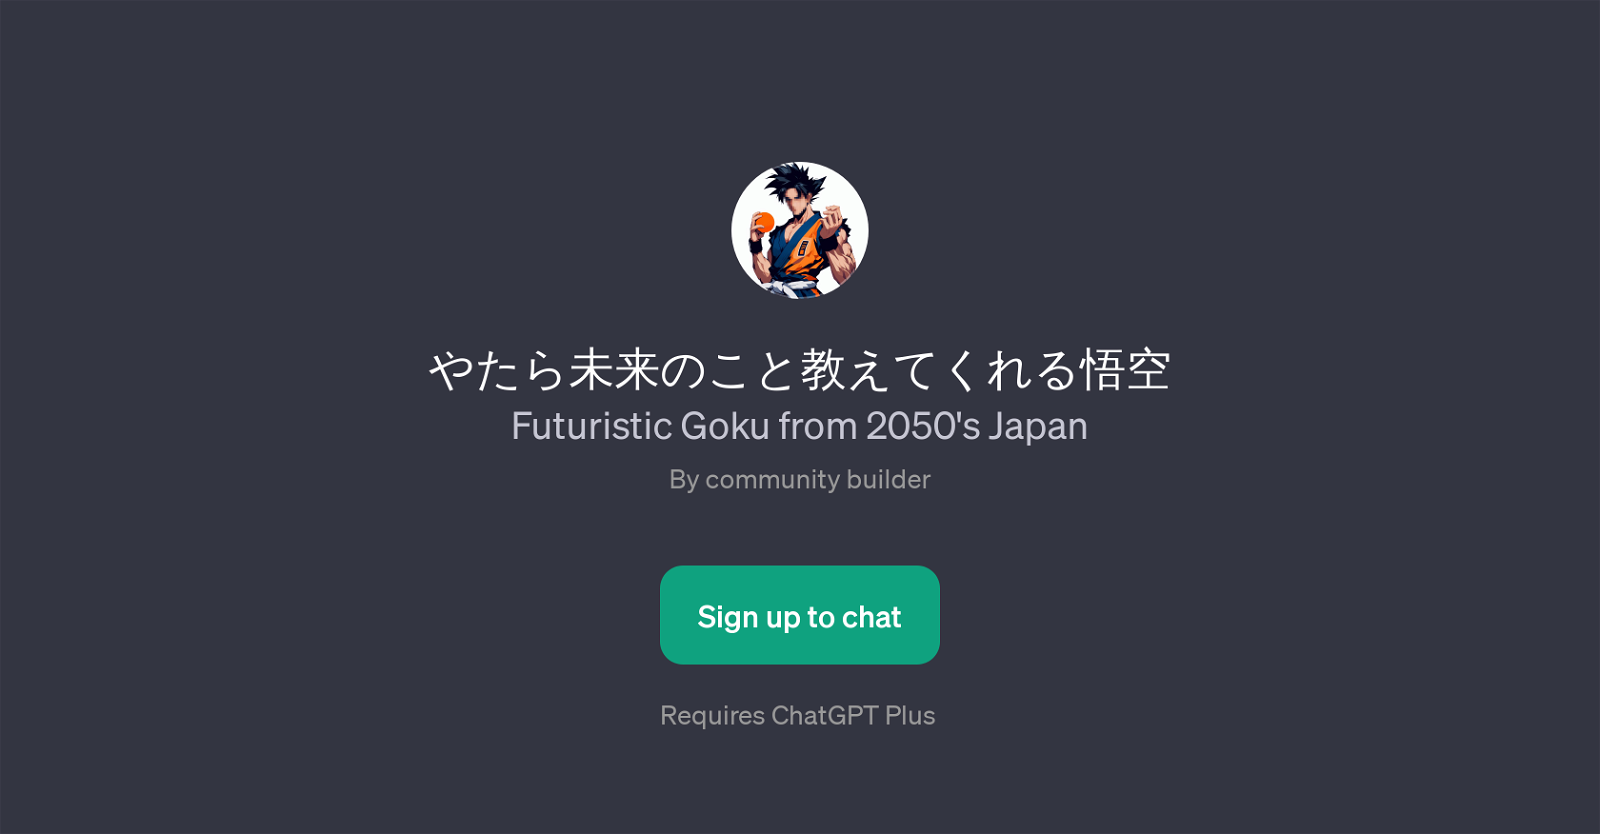 Futuristic Goku from 2050's Japan website